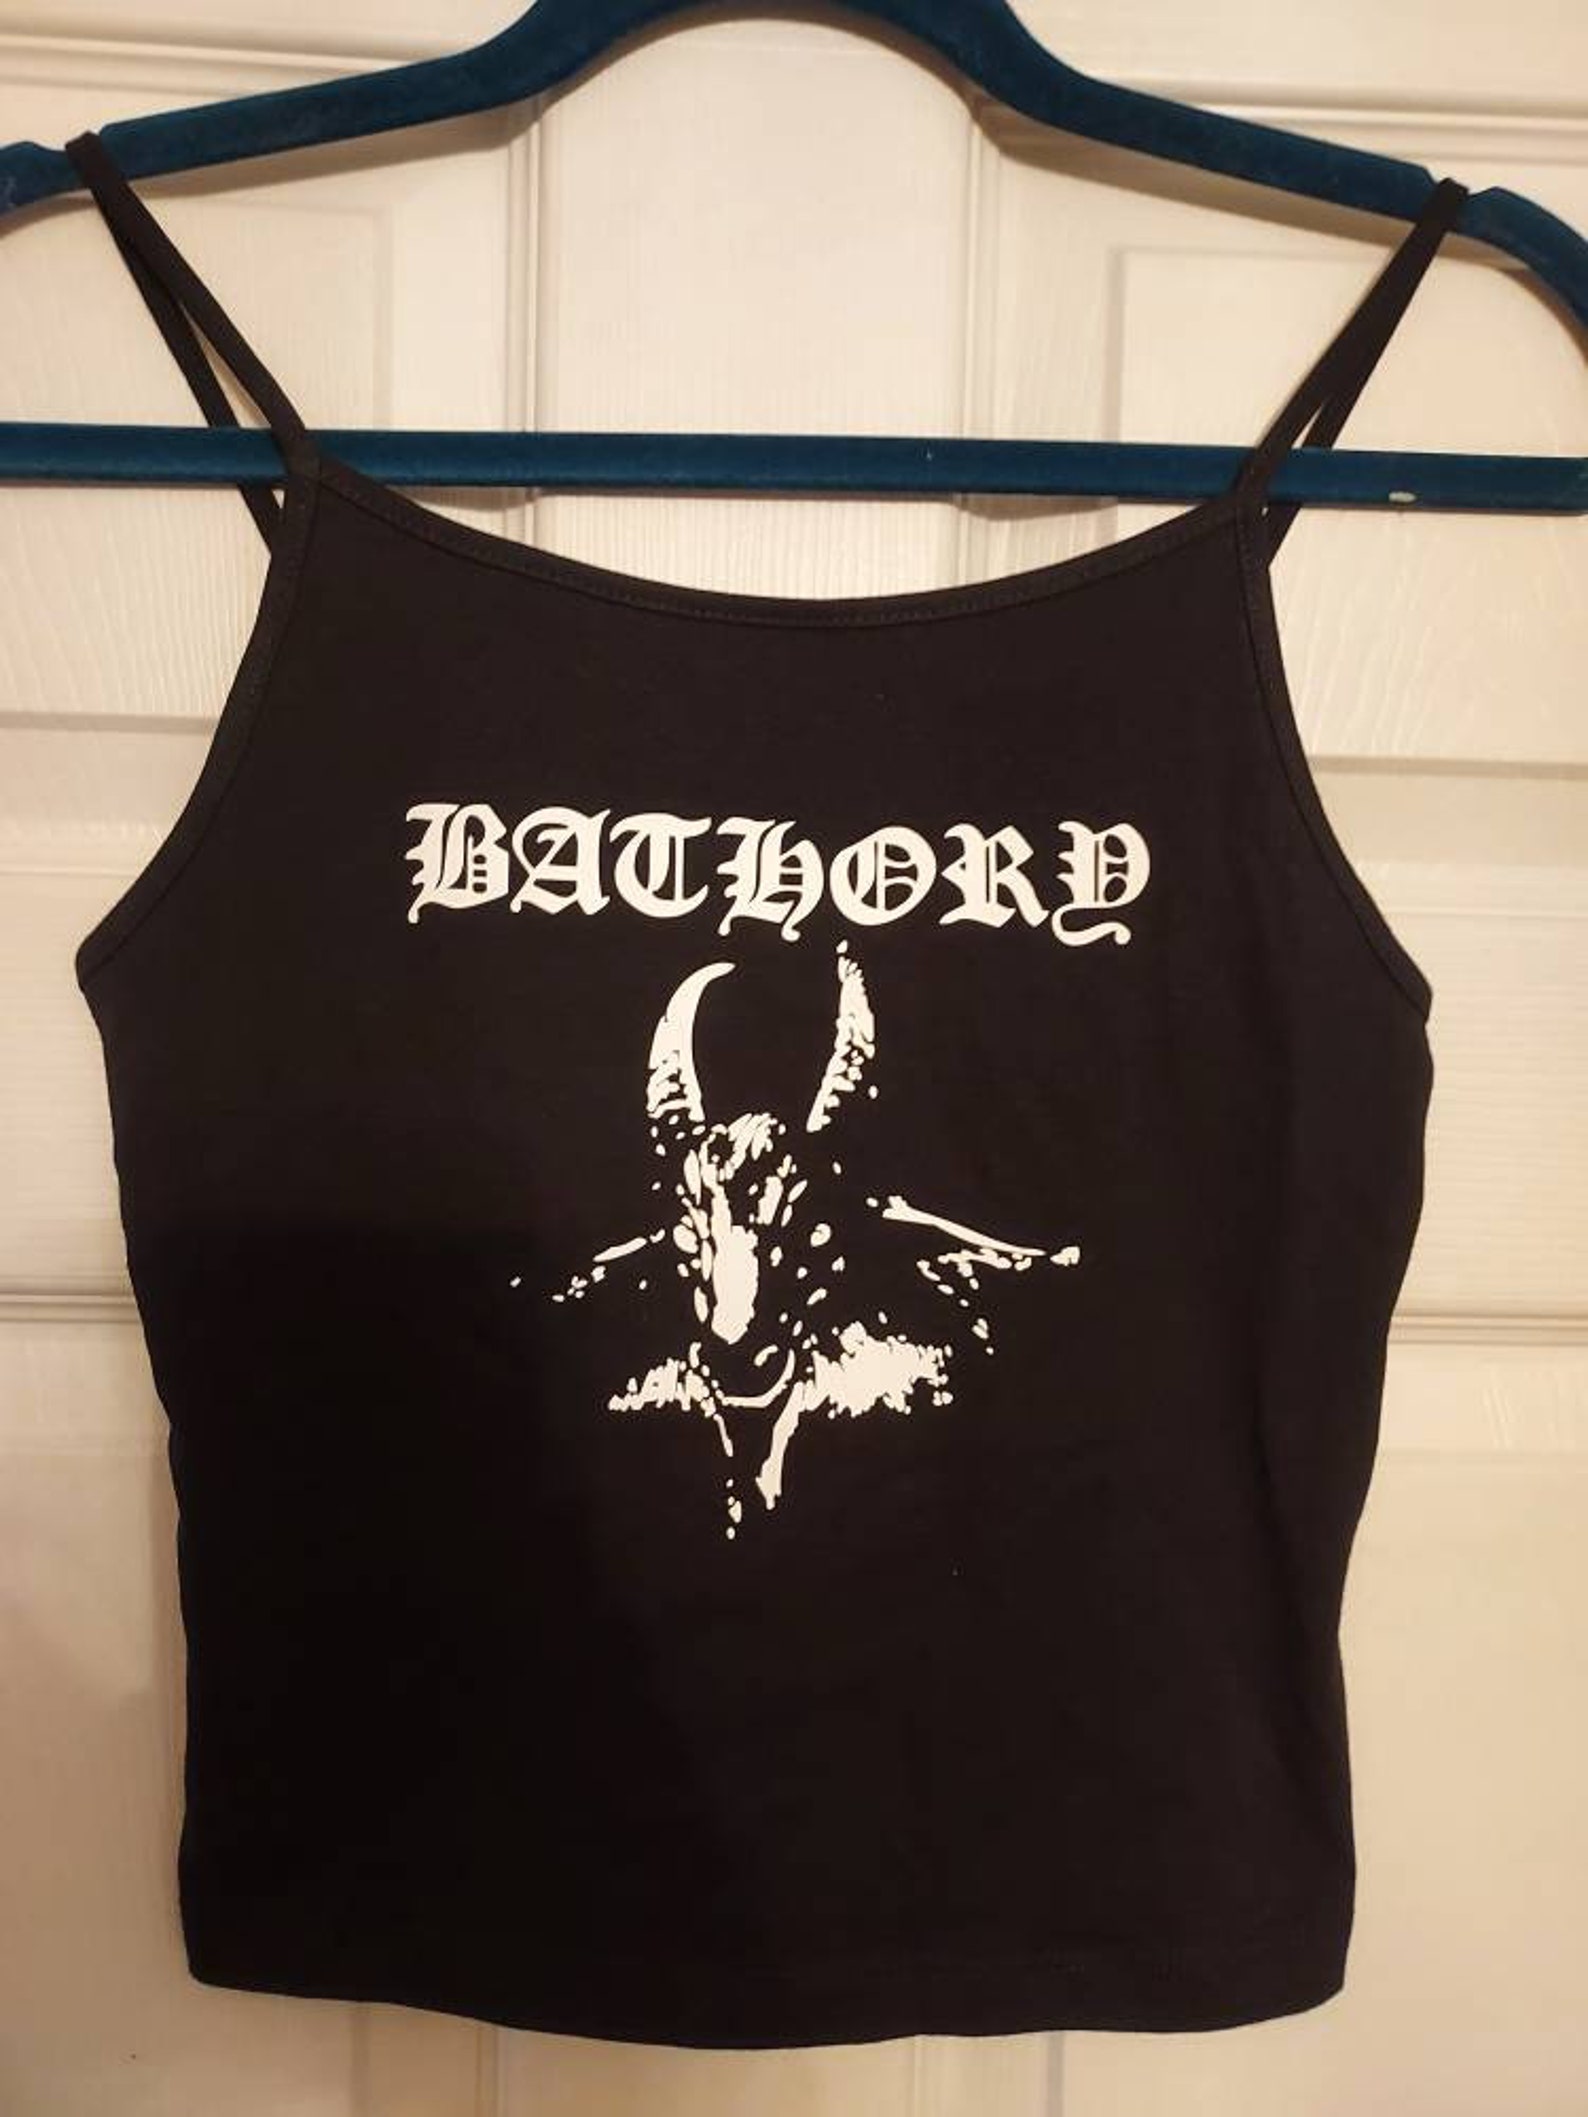 Bathory Crop Top Bathory Shirt Bathory Tank Top Cannibal - Etsy